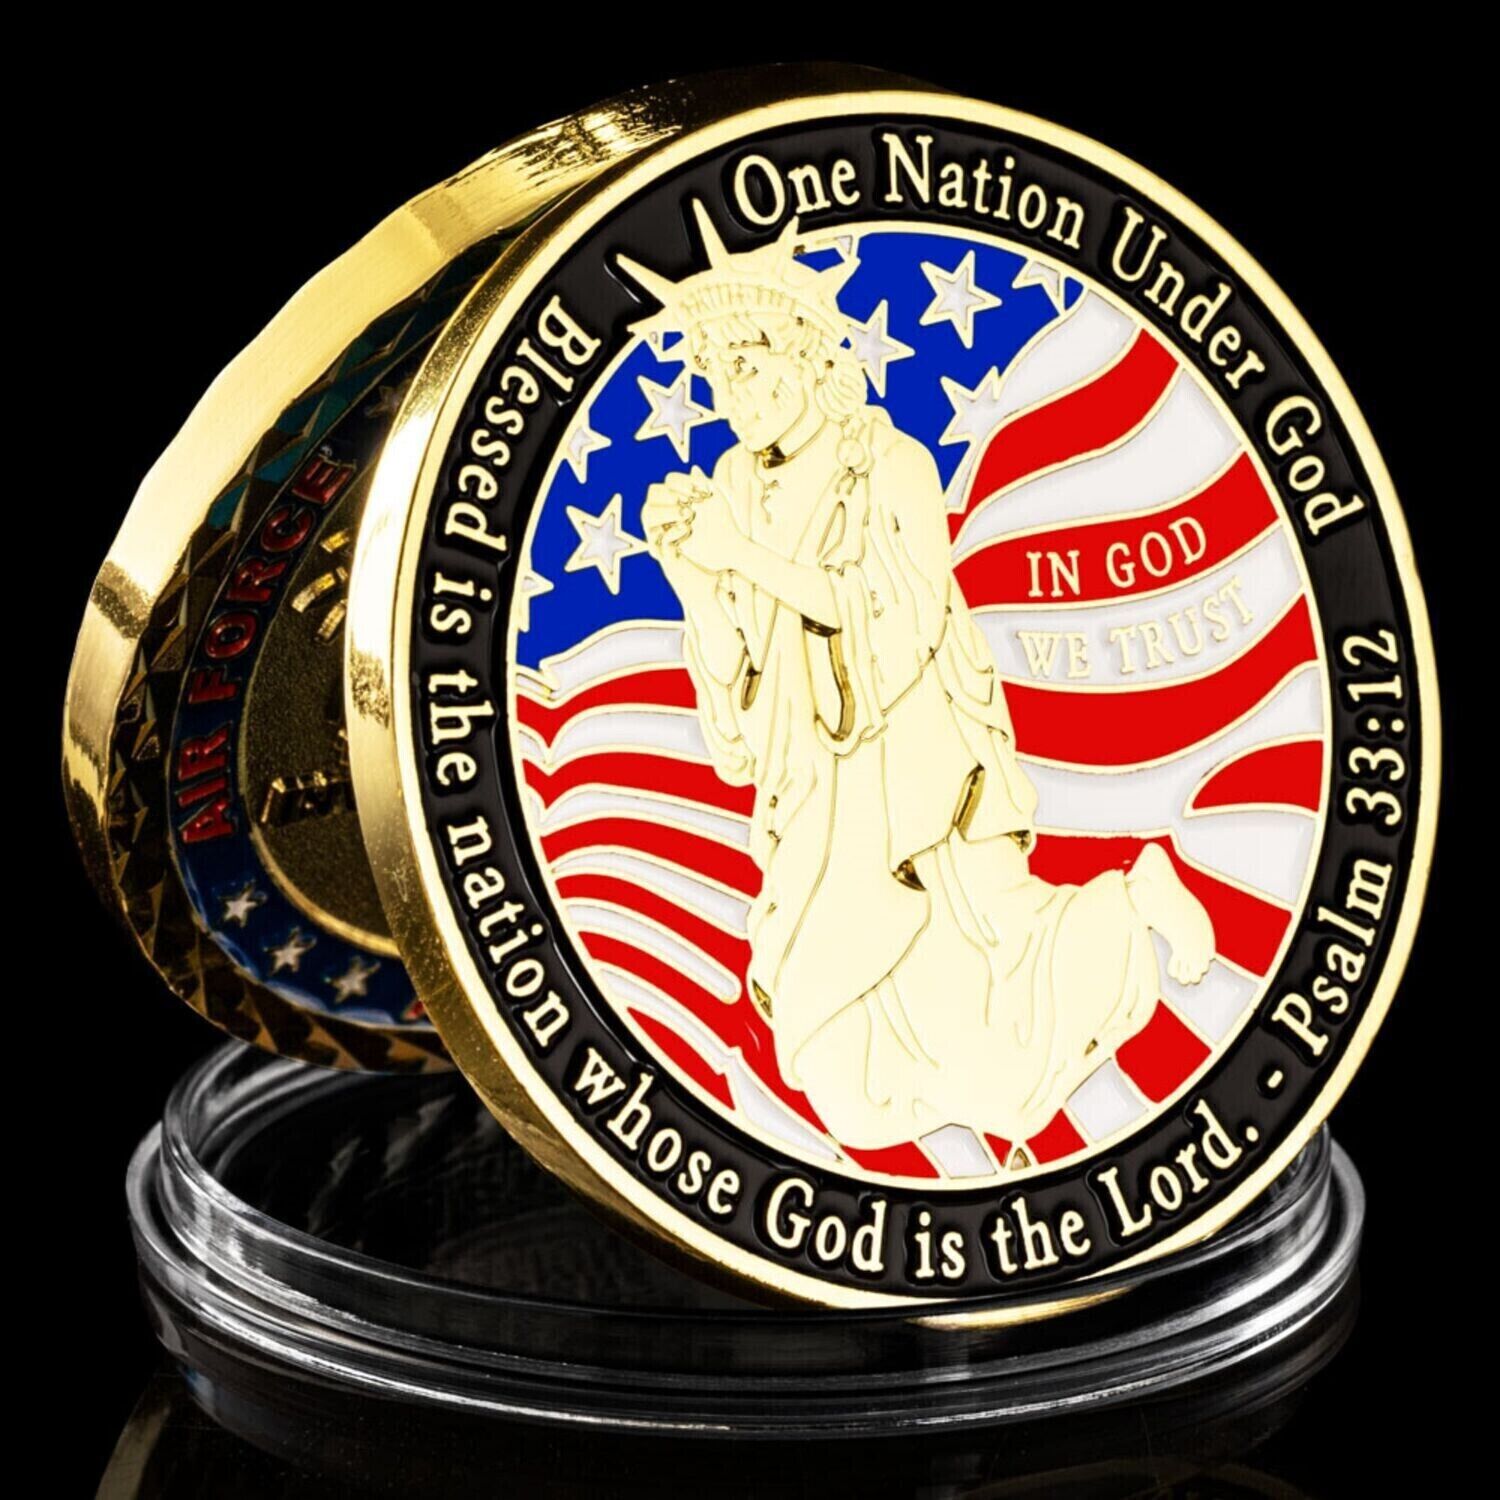 One Nation Under God Psalm 33:12 Challenge Coin